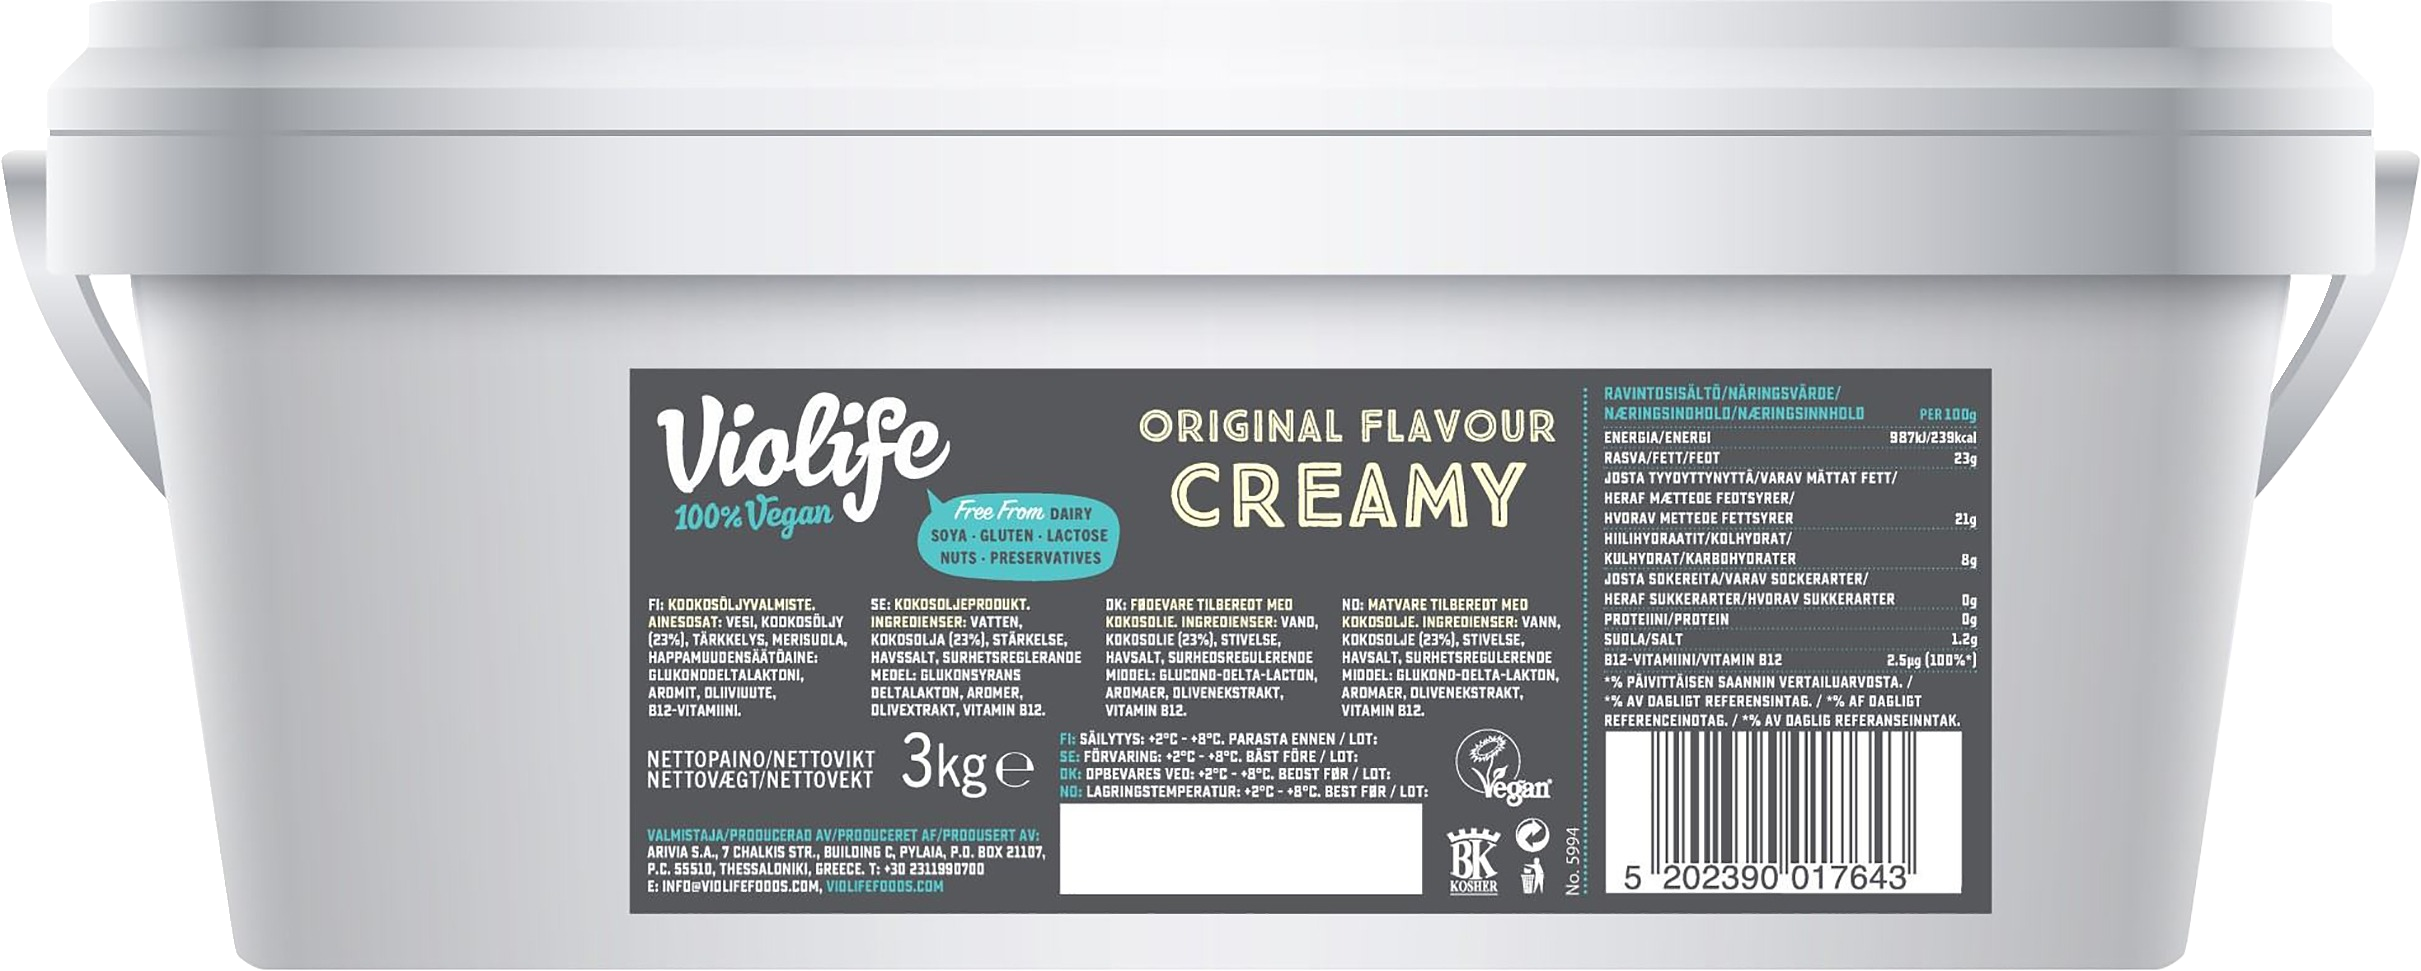 Violife Creamy Original 3kg